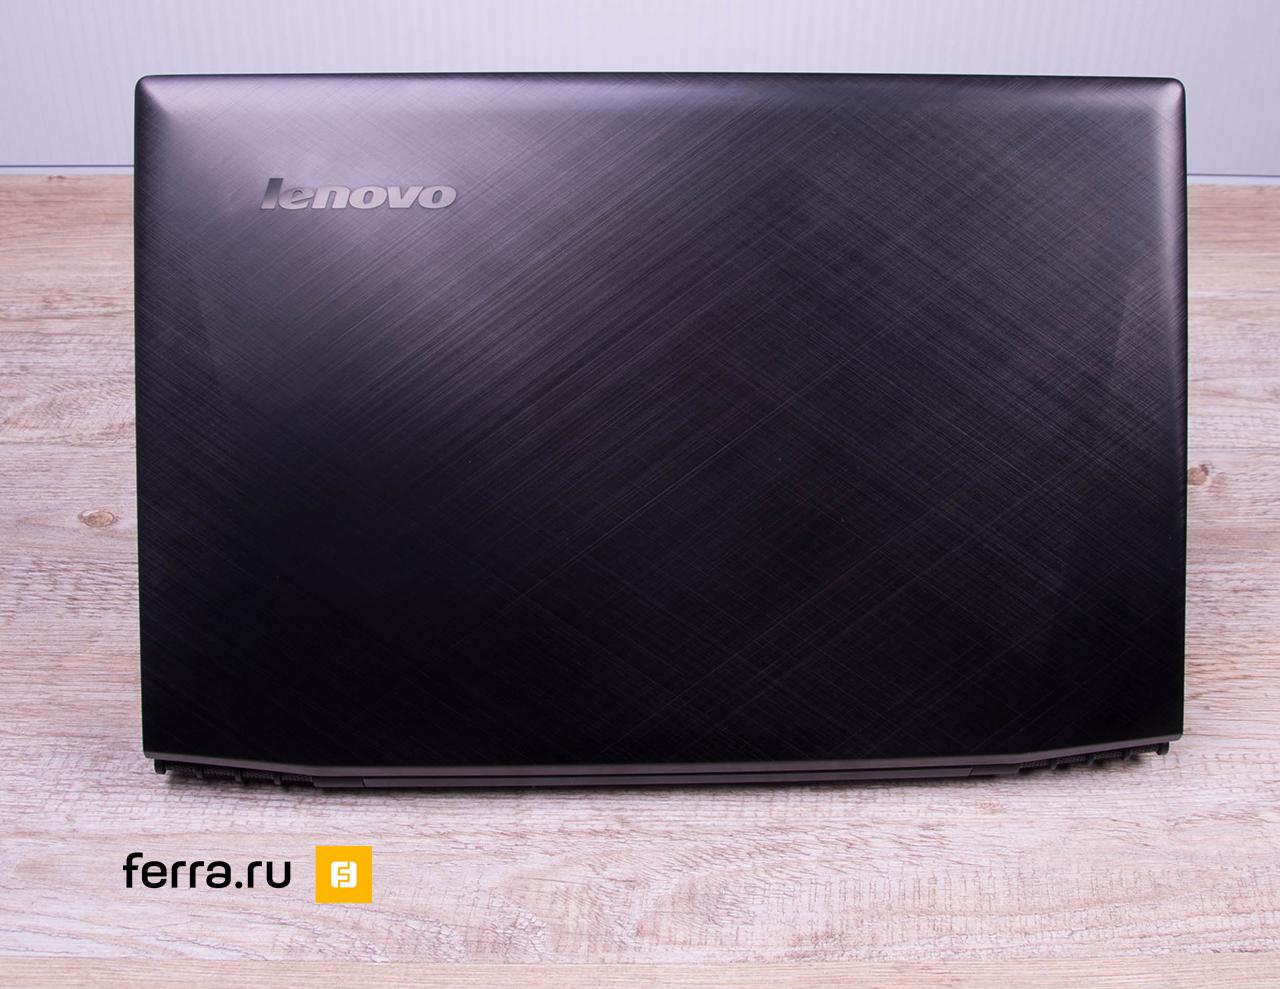 Купить Ноутбук Lenovo Ideapad Y50-70